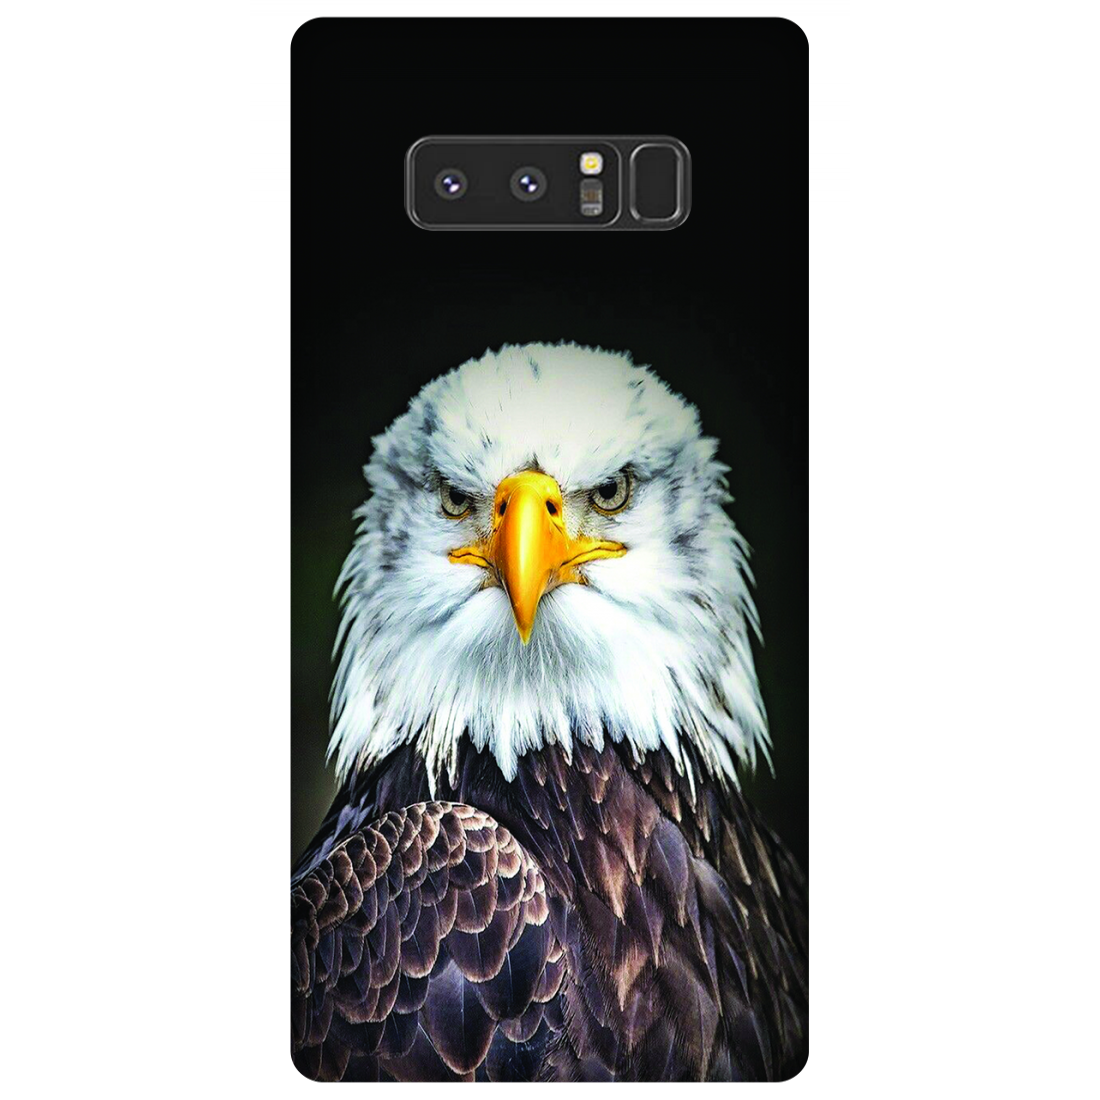 Majestic Bald Eagle Portrait Case Samsung Galaxy Note 8